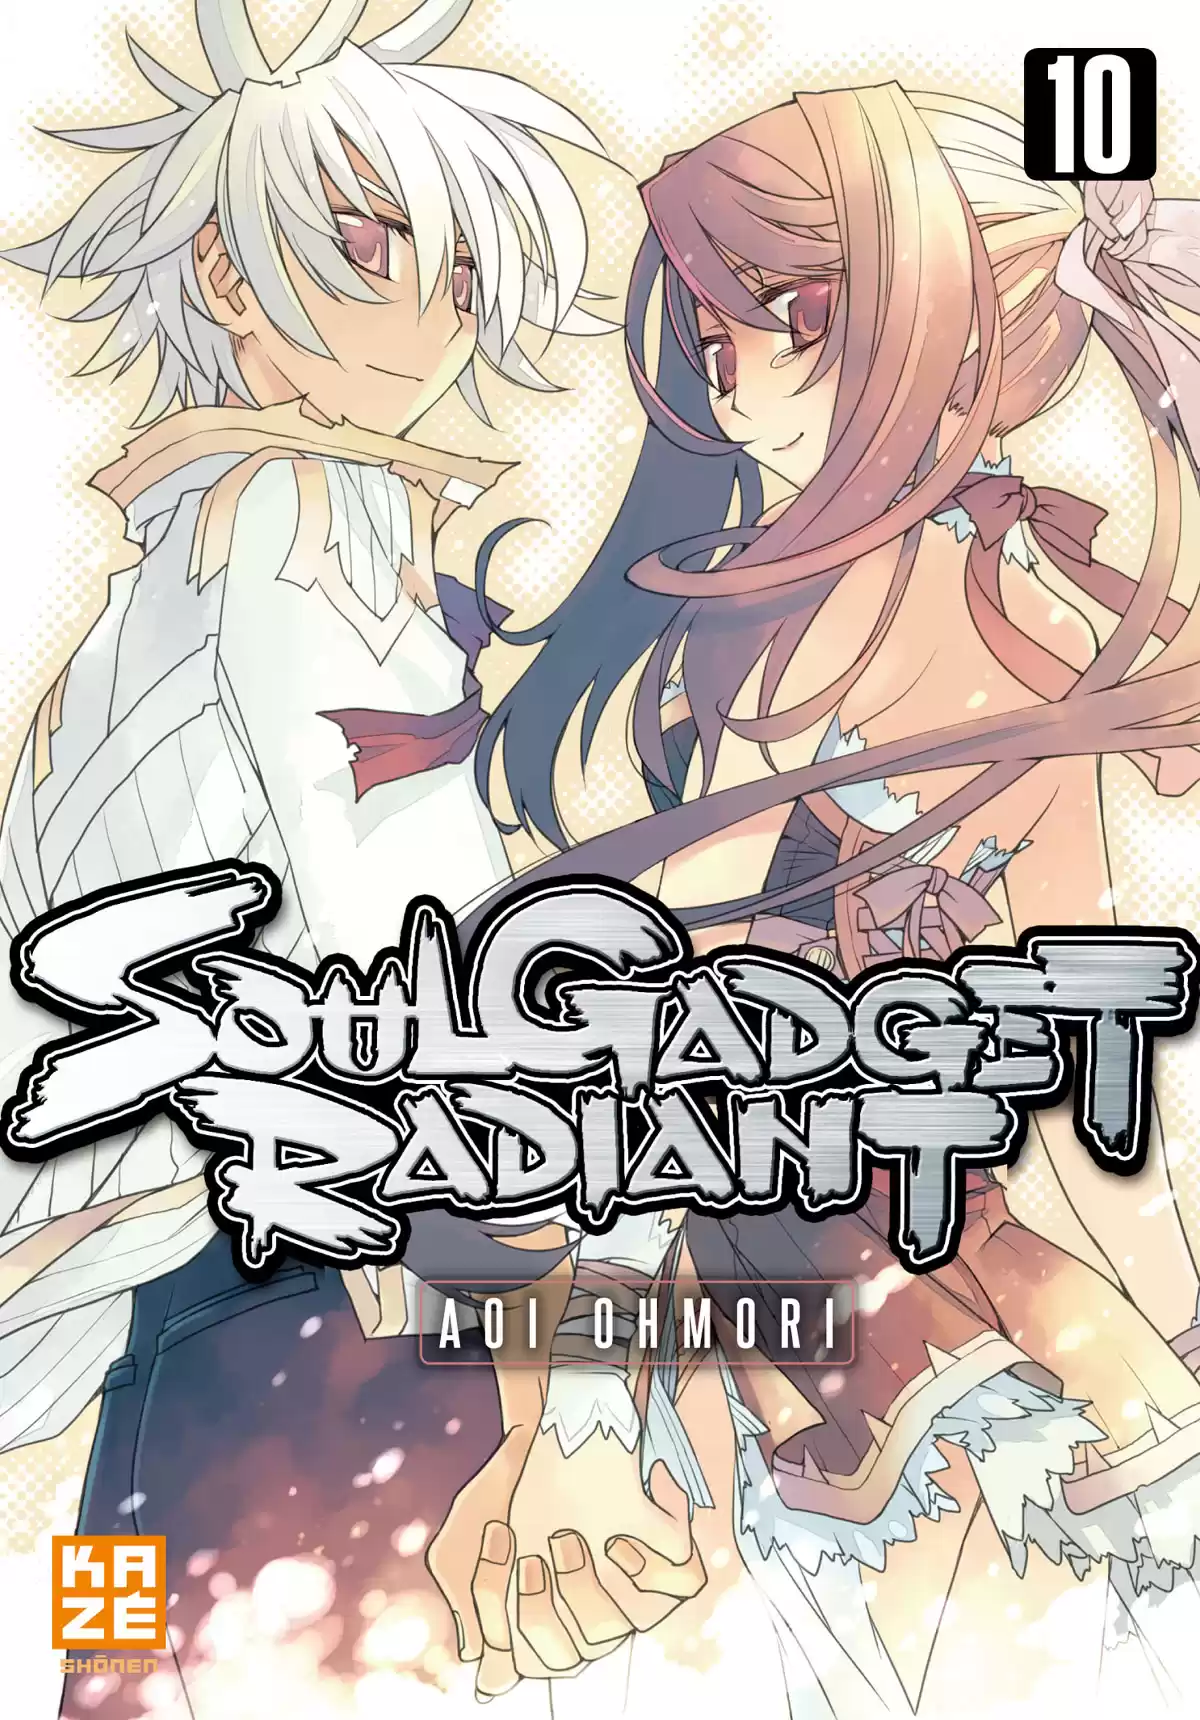 Soul Gadget Radiant Volume 10 page 1